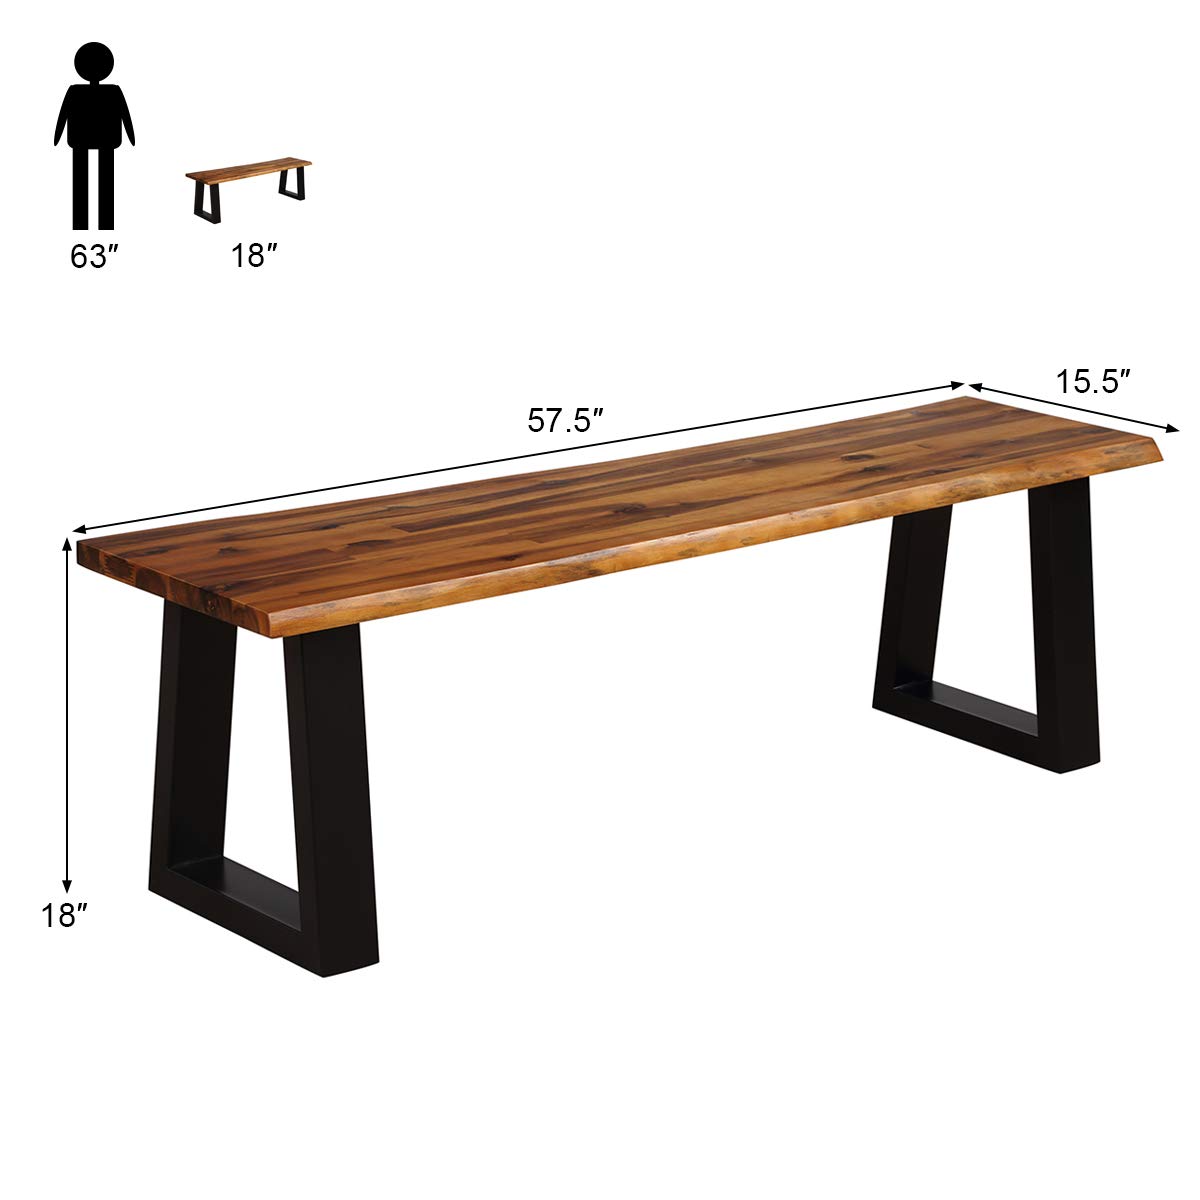 Giantex Wooden Dining Bench Seating Chair Rustic Indoor &Outdoor Furniture (Rustic Brown&Black)